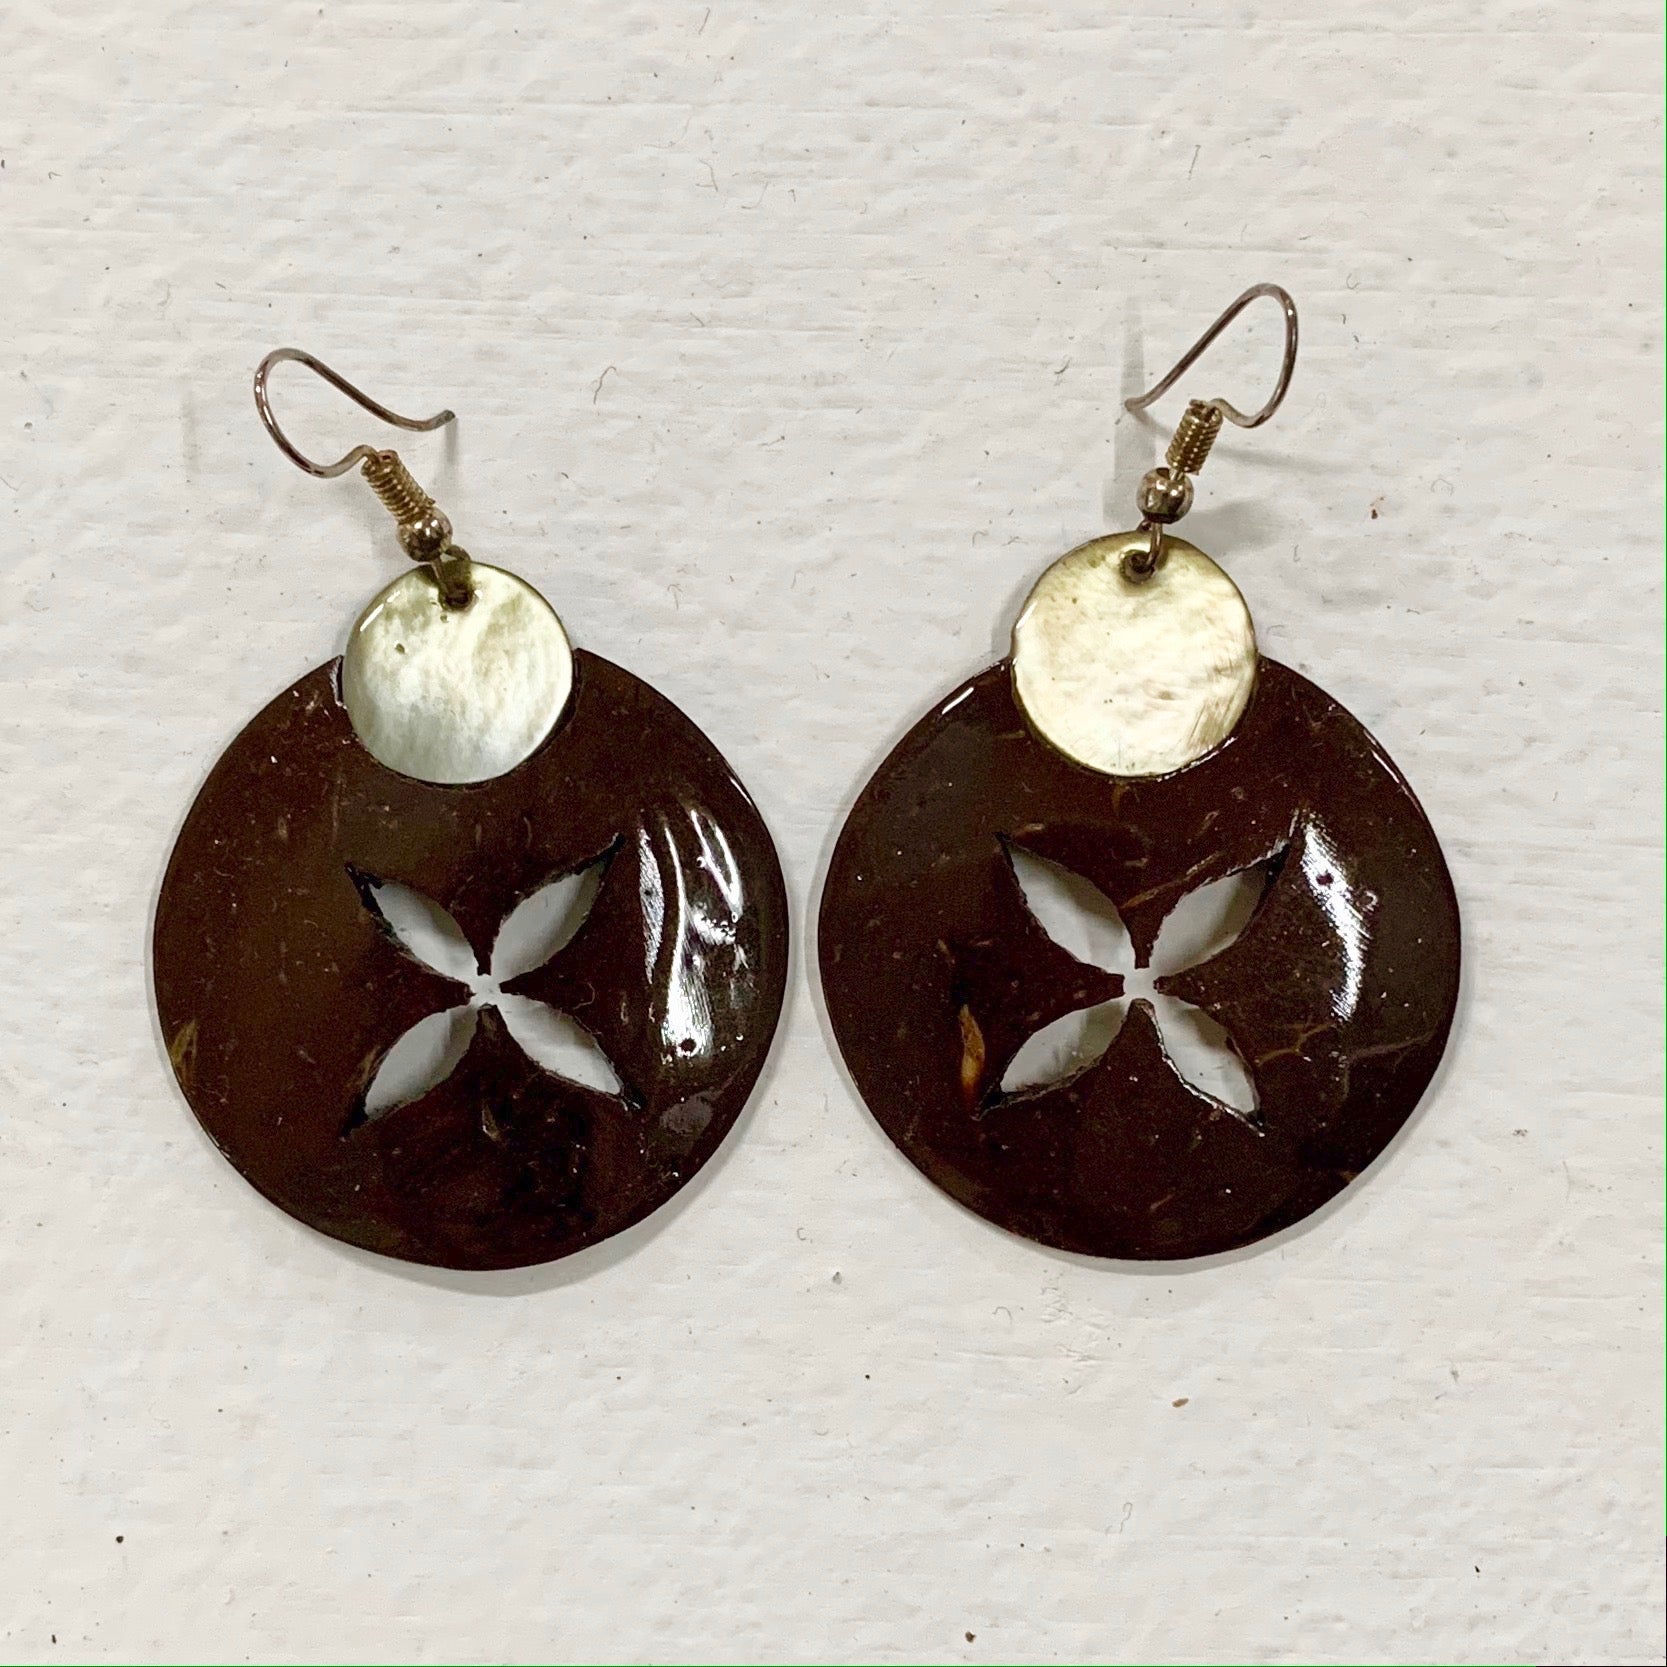 Coconut Earrings - Frangipani Mother of Pearl